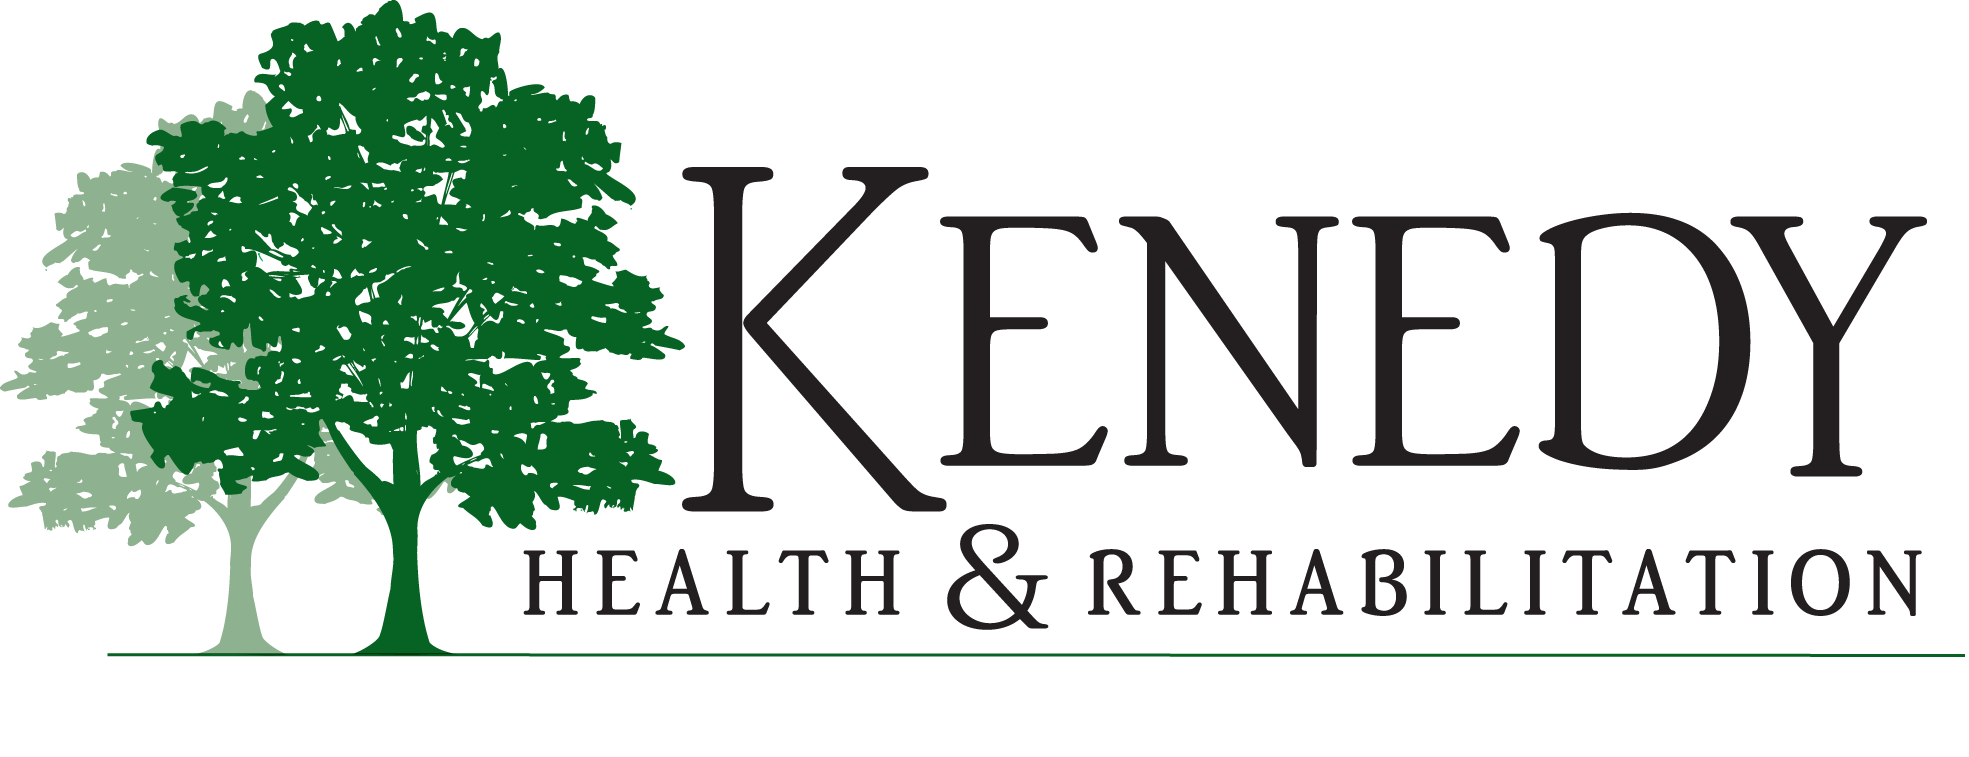 Kenedy Health and Rehab